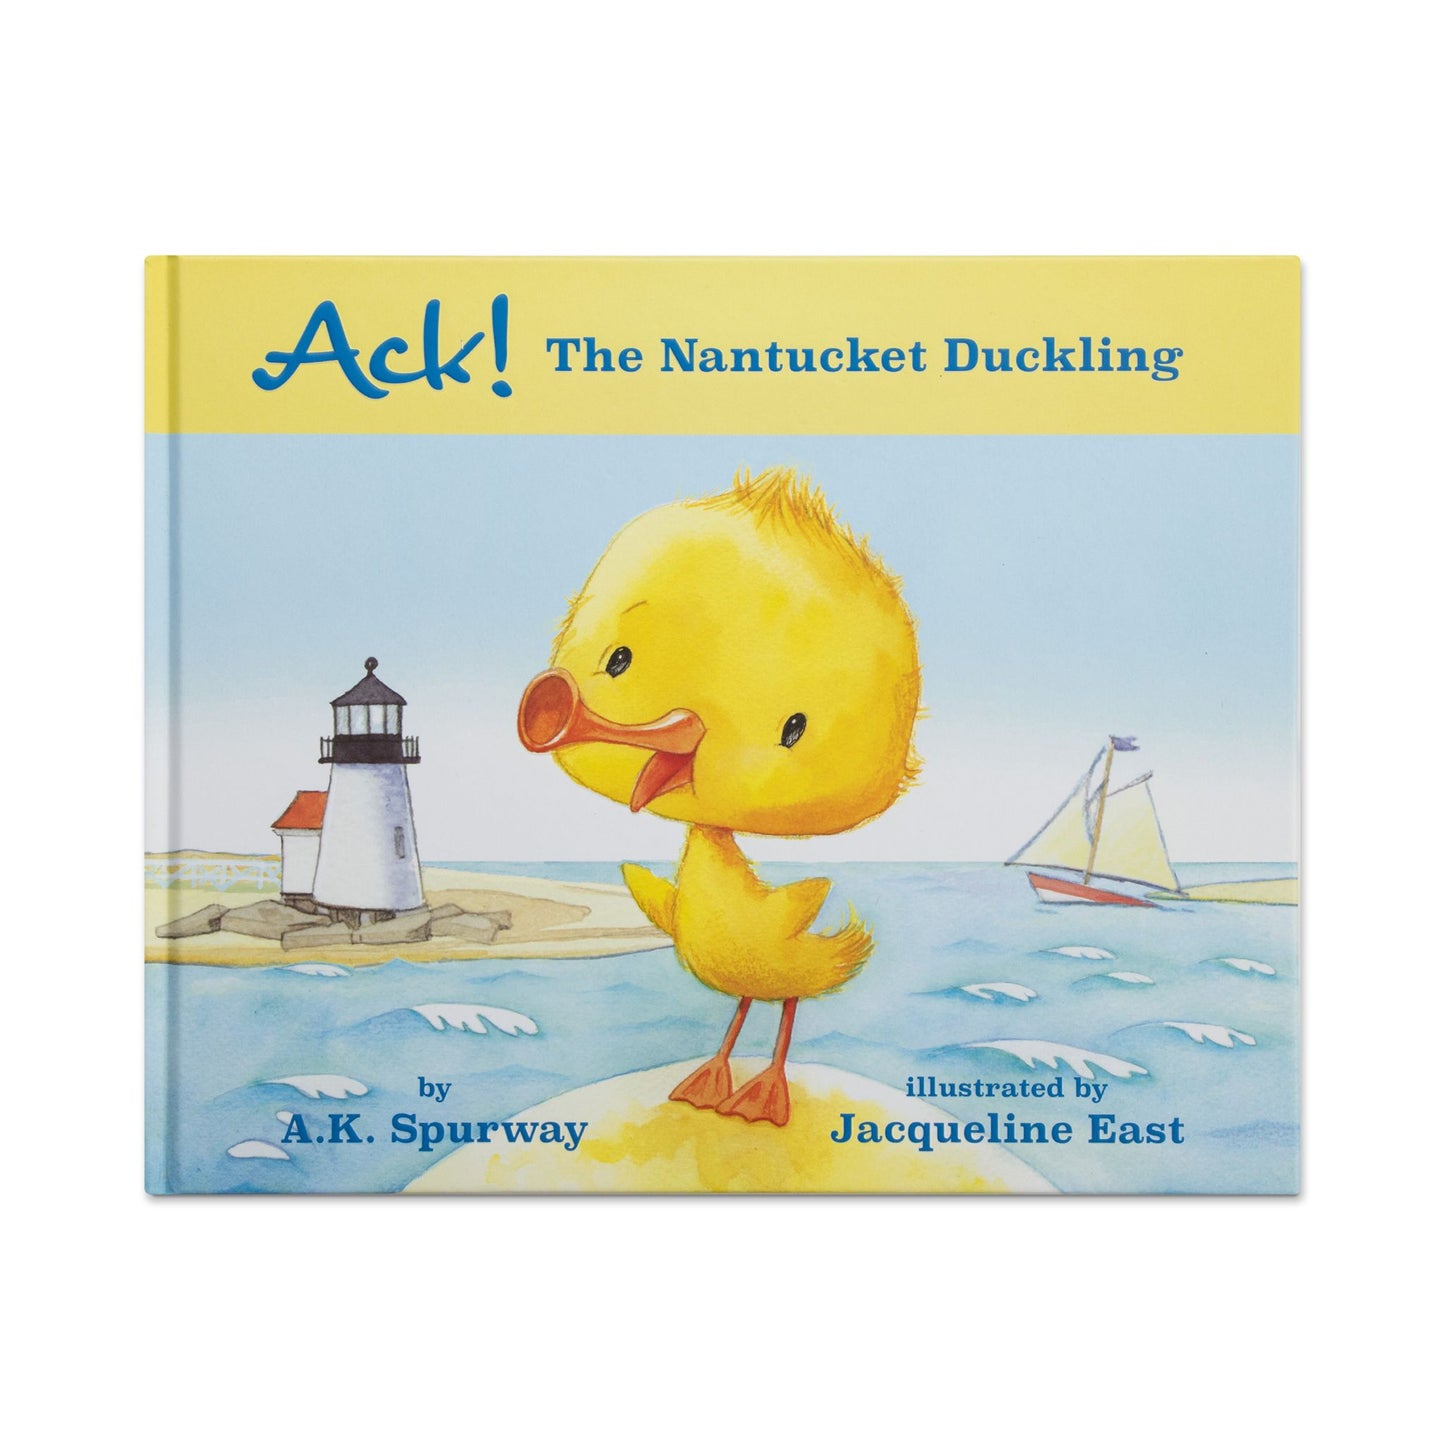 Nanducket - Ack! The Nantucket Duckling Book